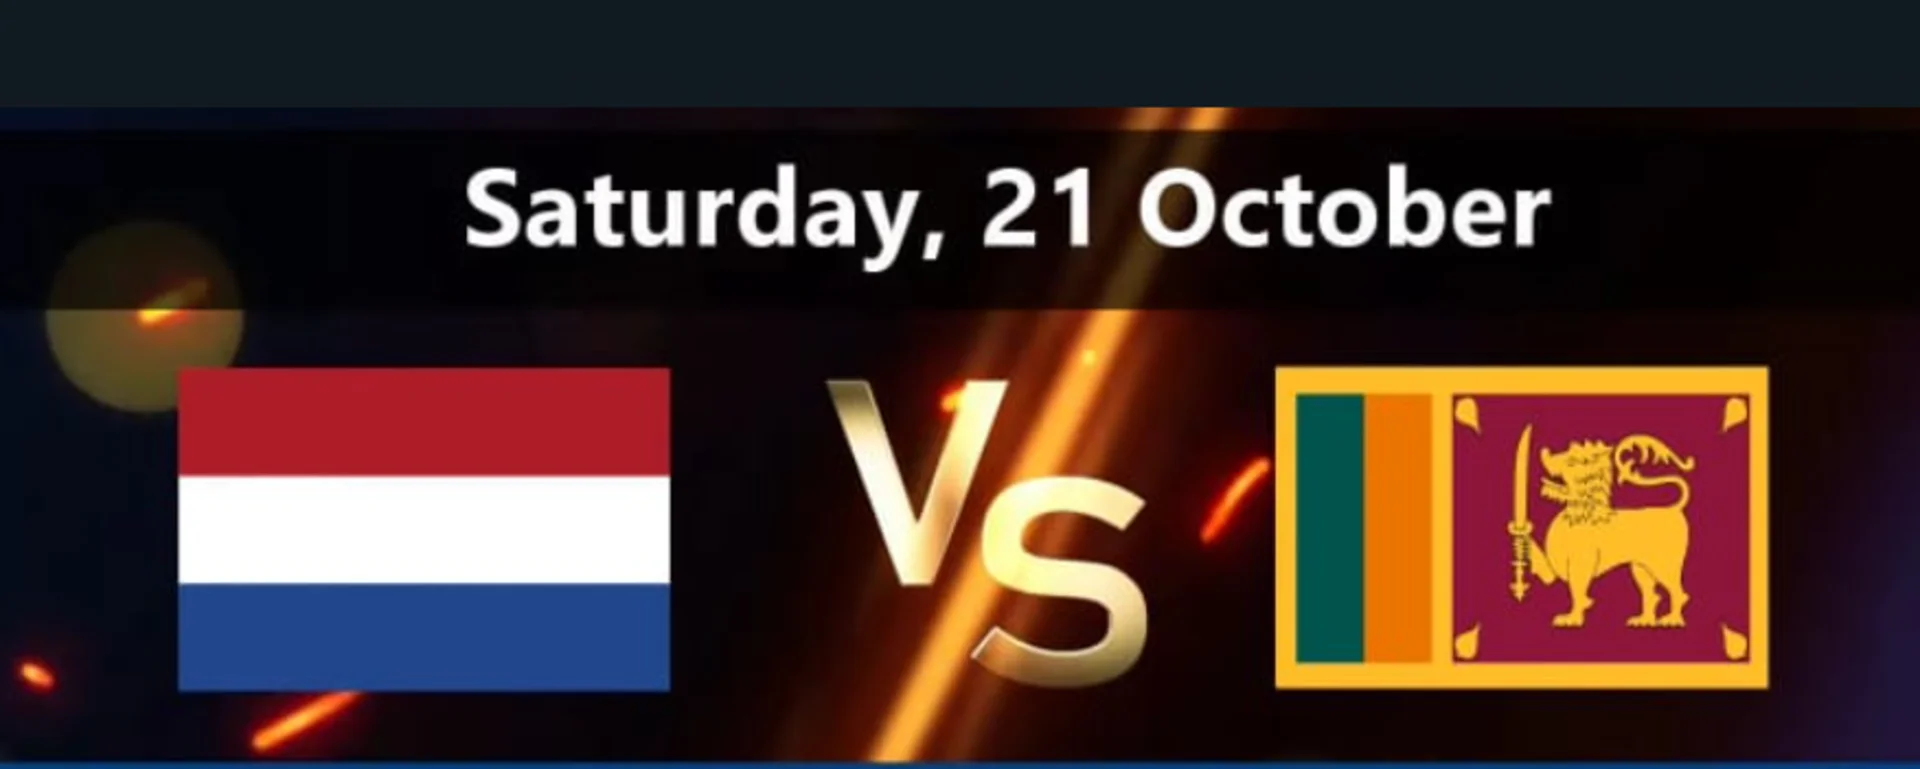 Netherlands vs Sri Lanka